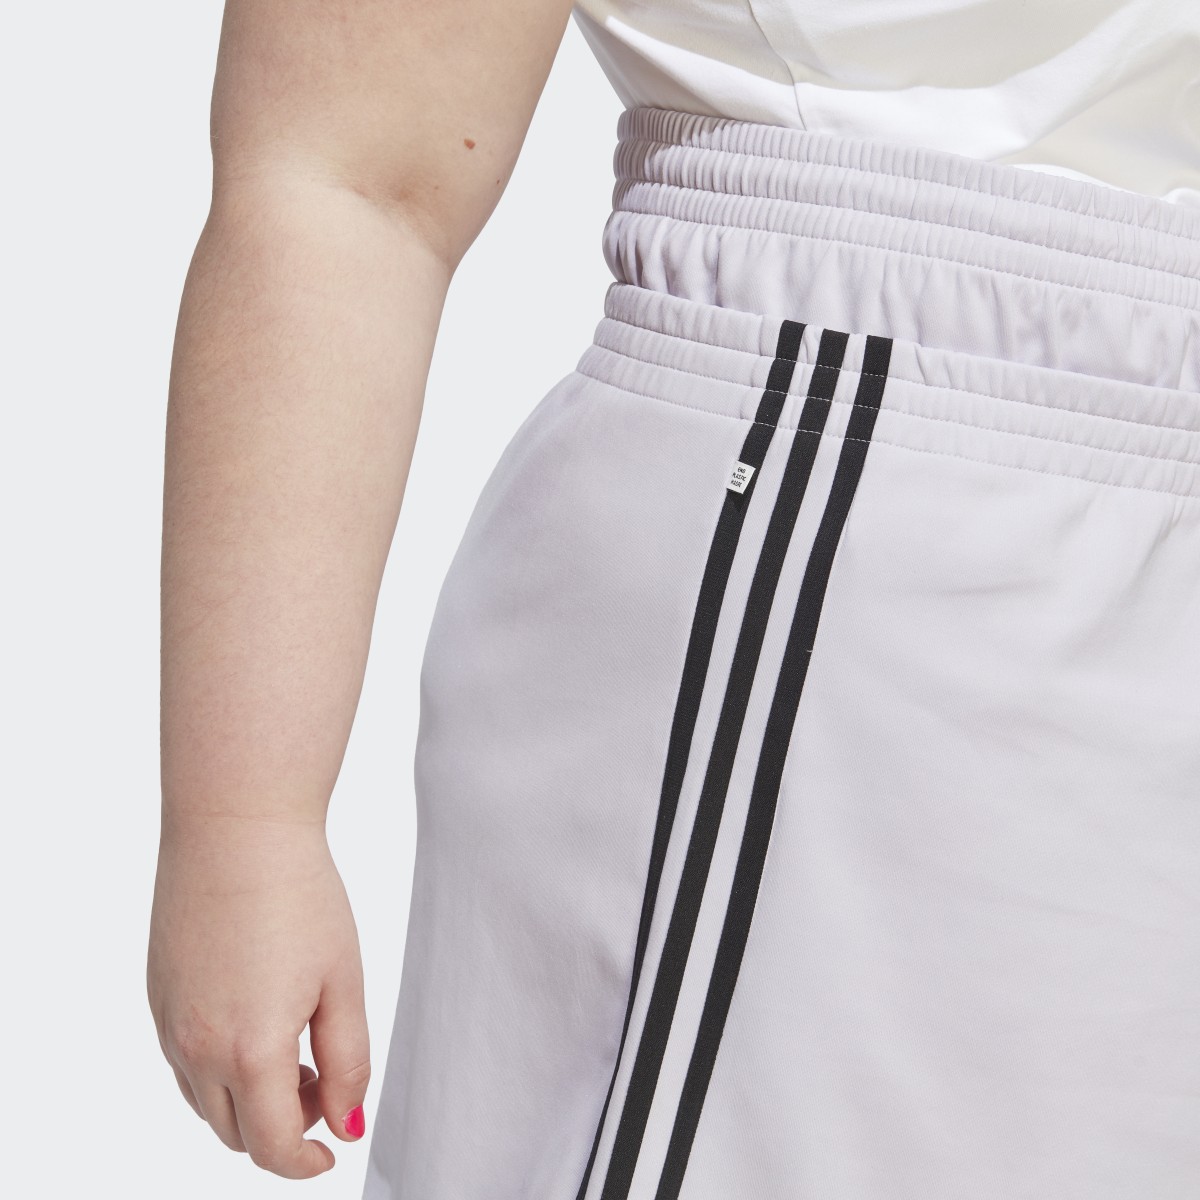 Adidas Always Original Skirt (Plus Size). 5